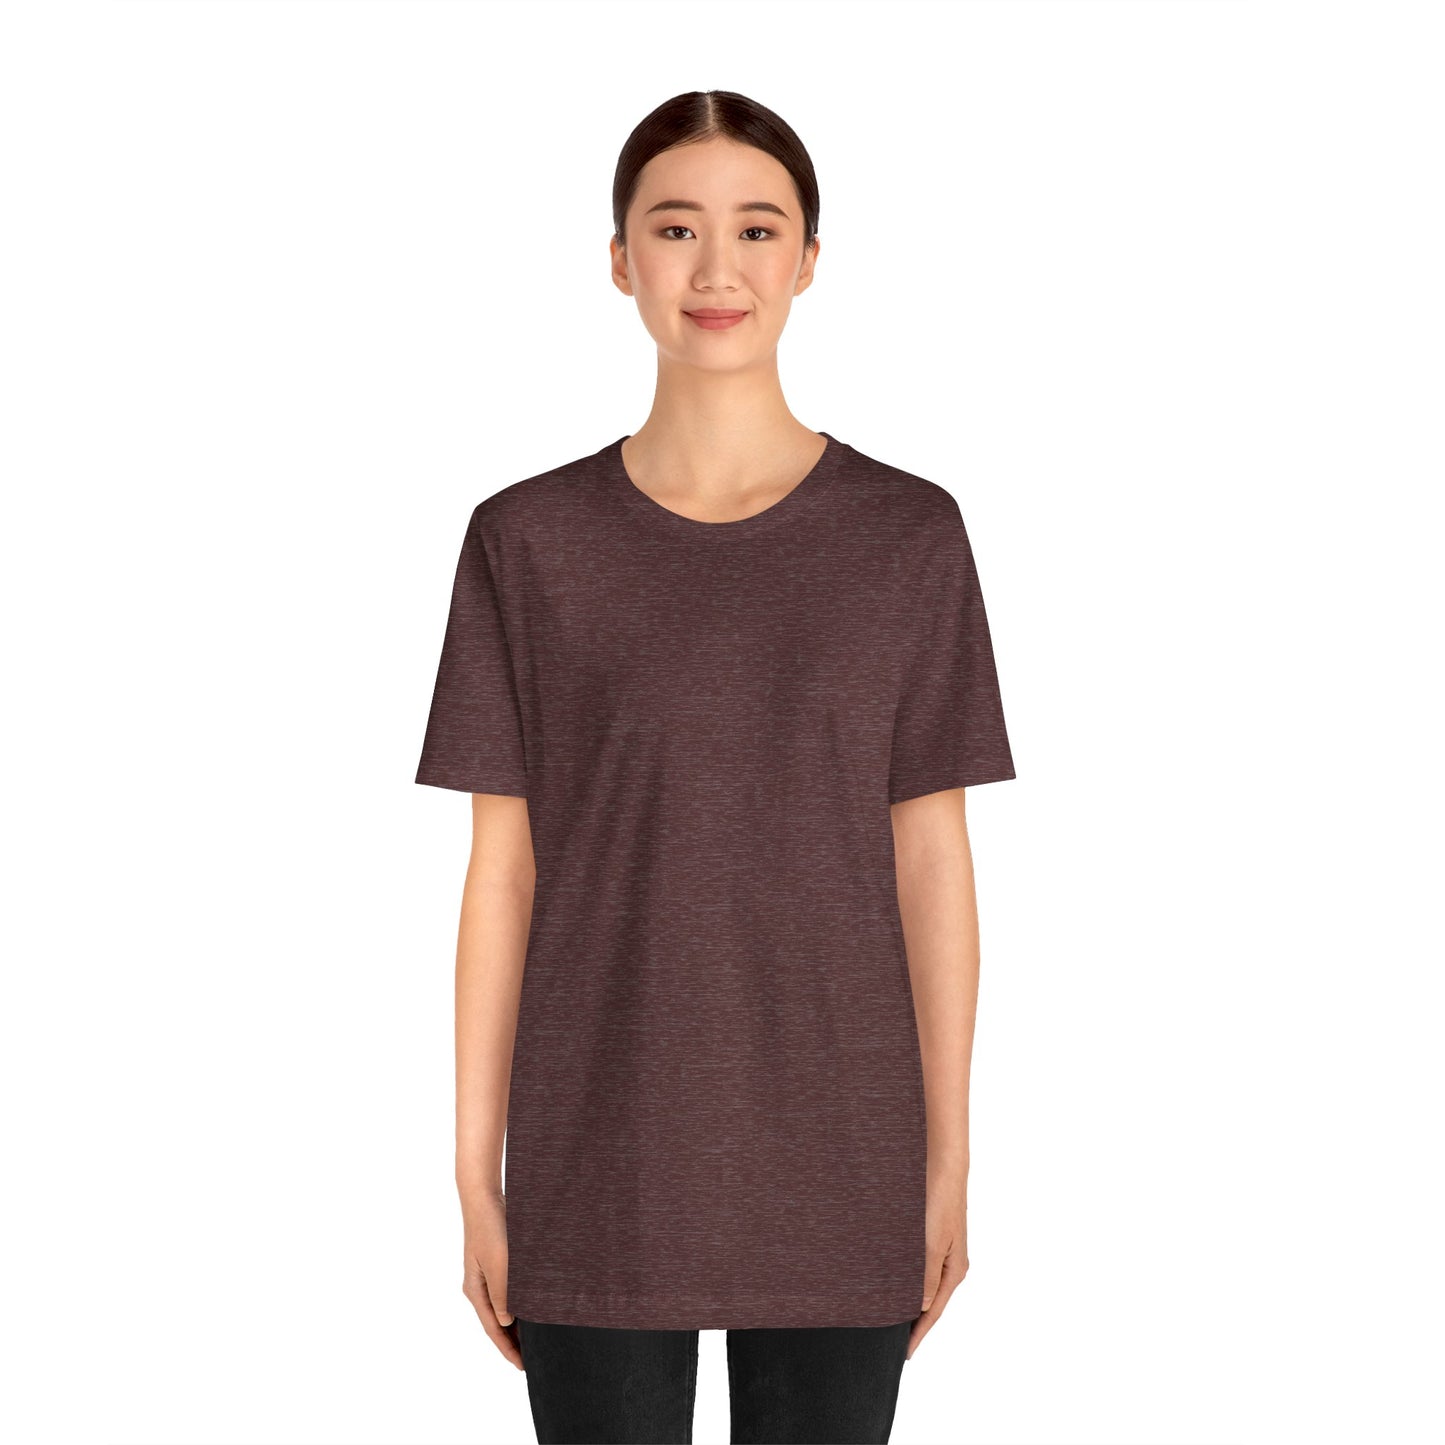 Womens Heather Maroon T Shirts Premium Casual Short Sleeve Shirts Oversized Tops